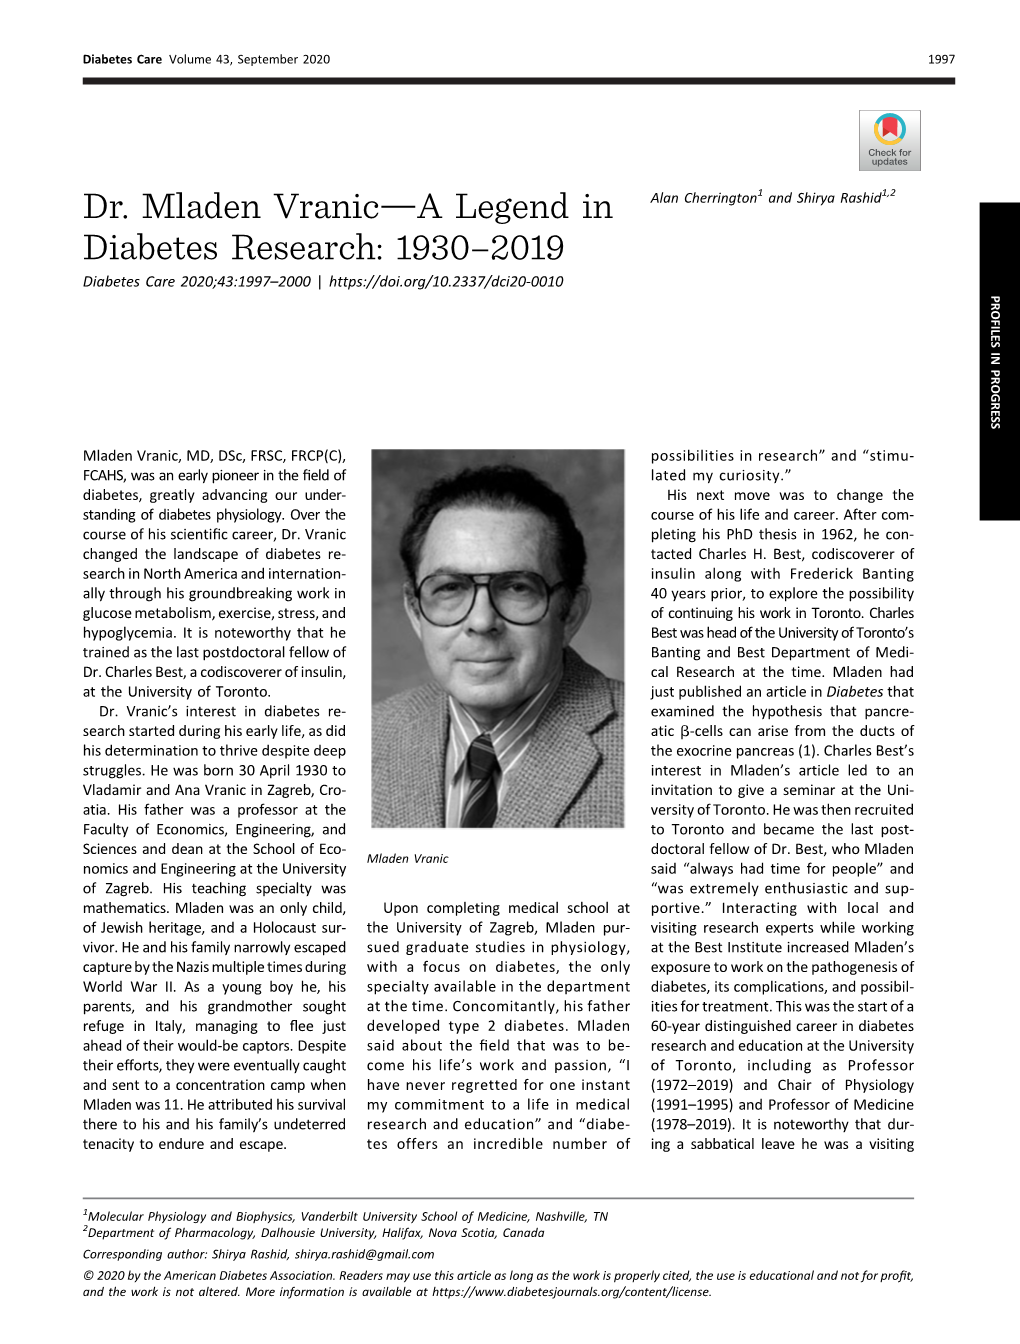 Dr. Mladen Vranic—A Legend in Diabetes Research